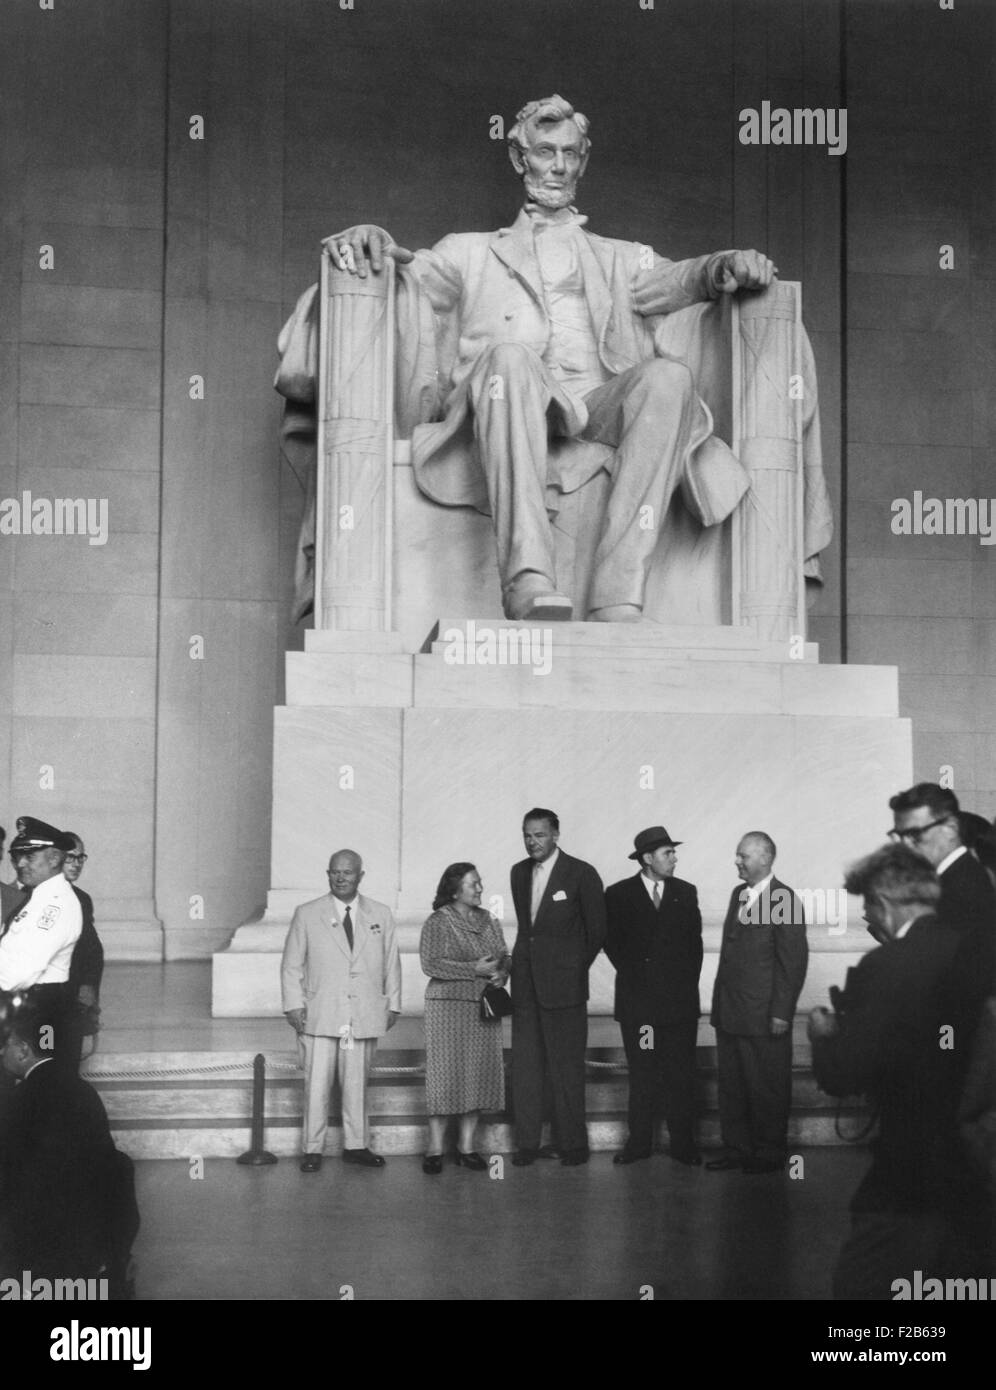 Premier Nikita Khrushchev and others beneath the Lincoln statue in the Lincoln Memorial. L-R: Nikita & Nina Khrushchev, Christian Herter, Andrei Gromyko, and Mikhail Menshikov, Russian Ambassador to the U.S. Sept. 16, 1959. - (BSLOC 2014 16 150) Stock Photo